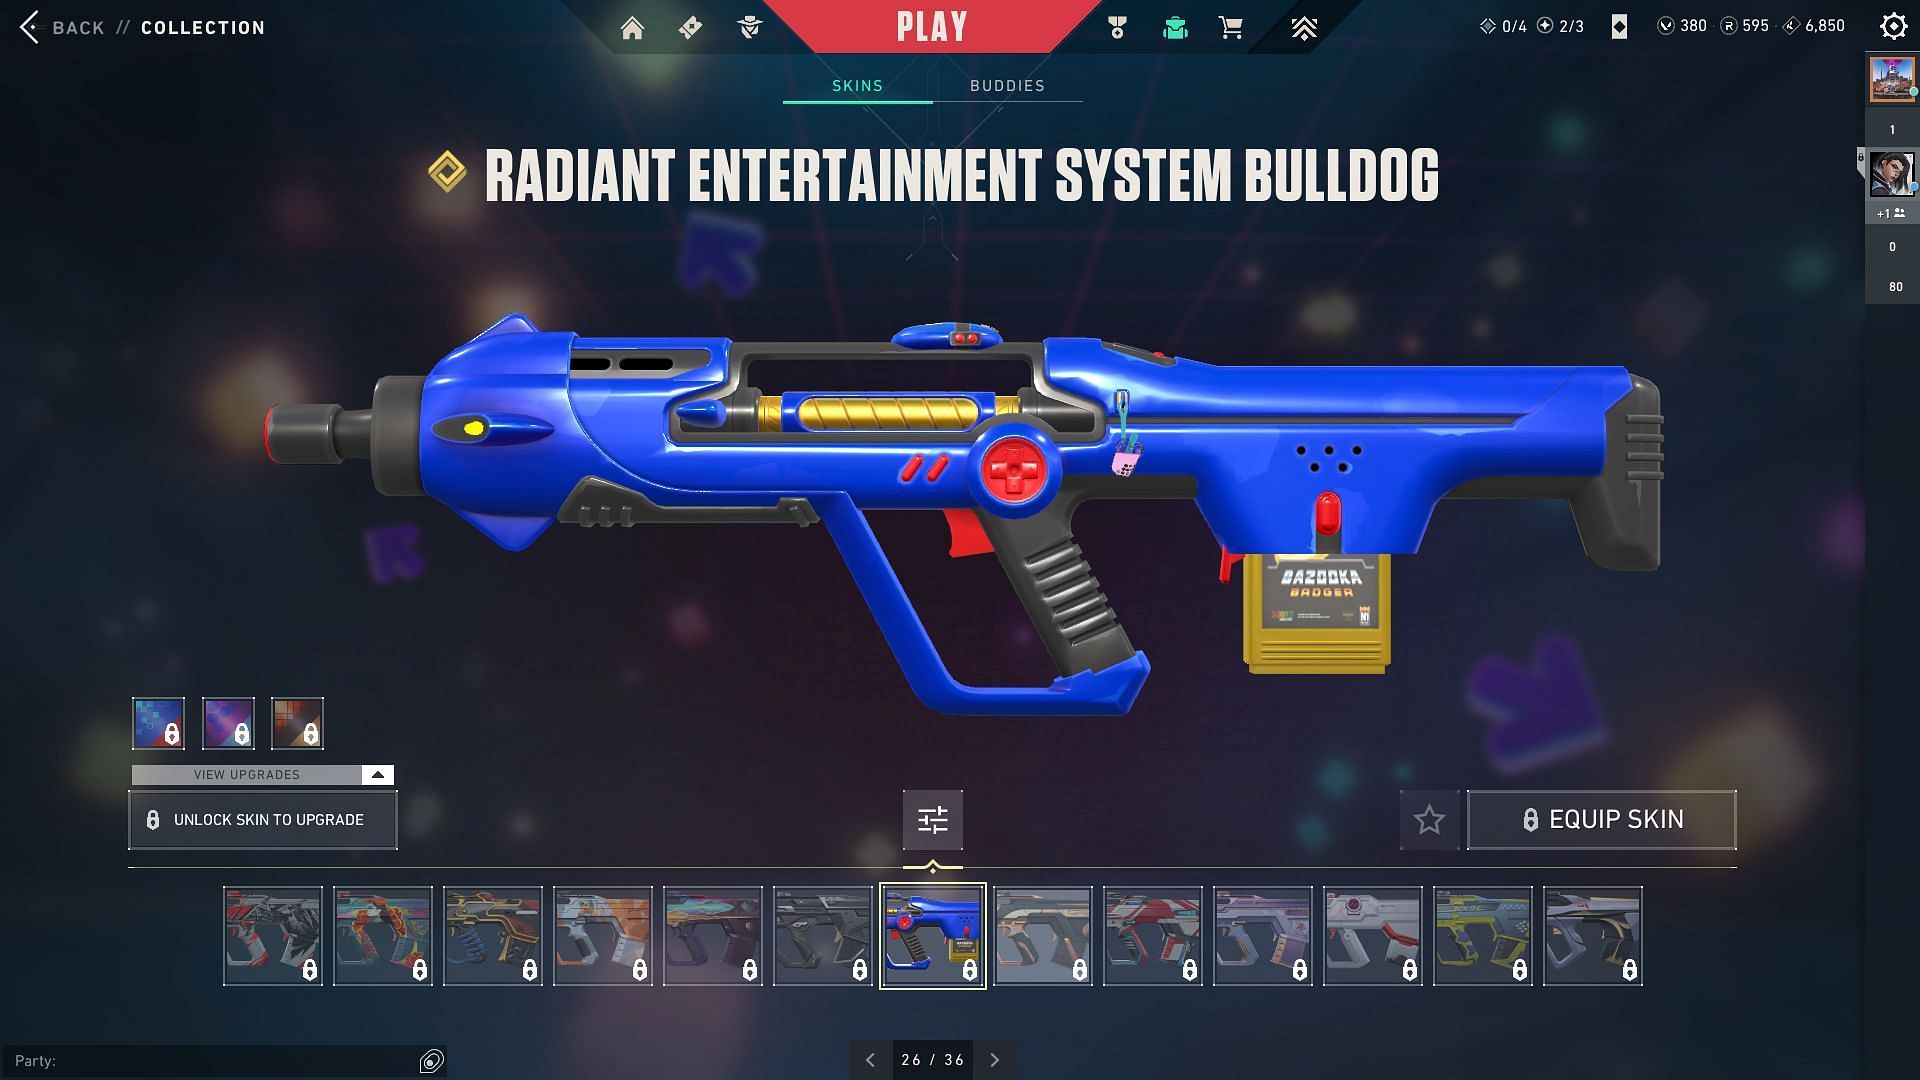 Radiant Entertainment System Bulldog (Image via Riot Games)